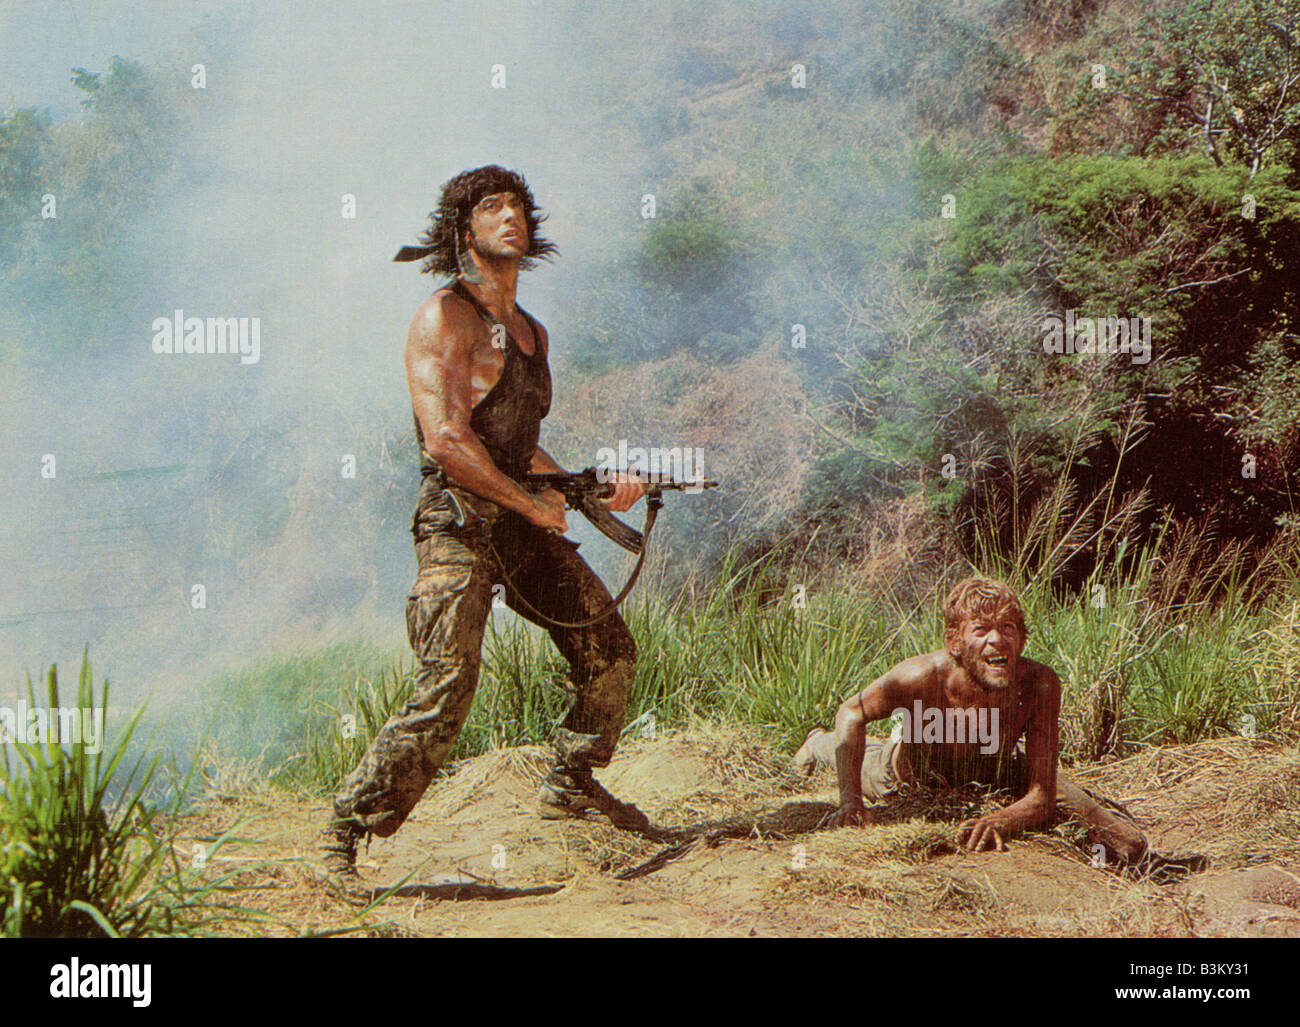 RAMBO - Blut zuerst Teil 2 1985 Anabasis Investments NV Film mit Sylvester Stallone Stockfoto